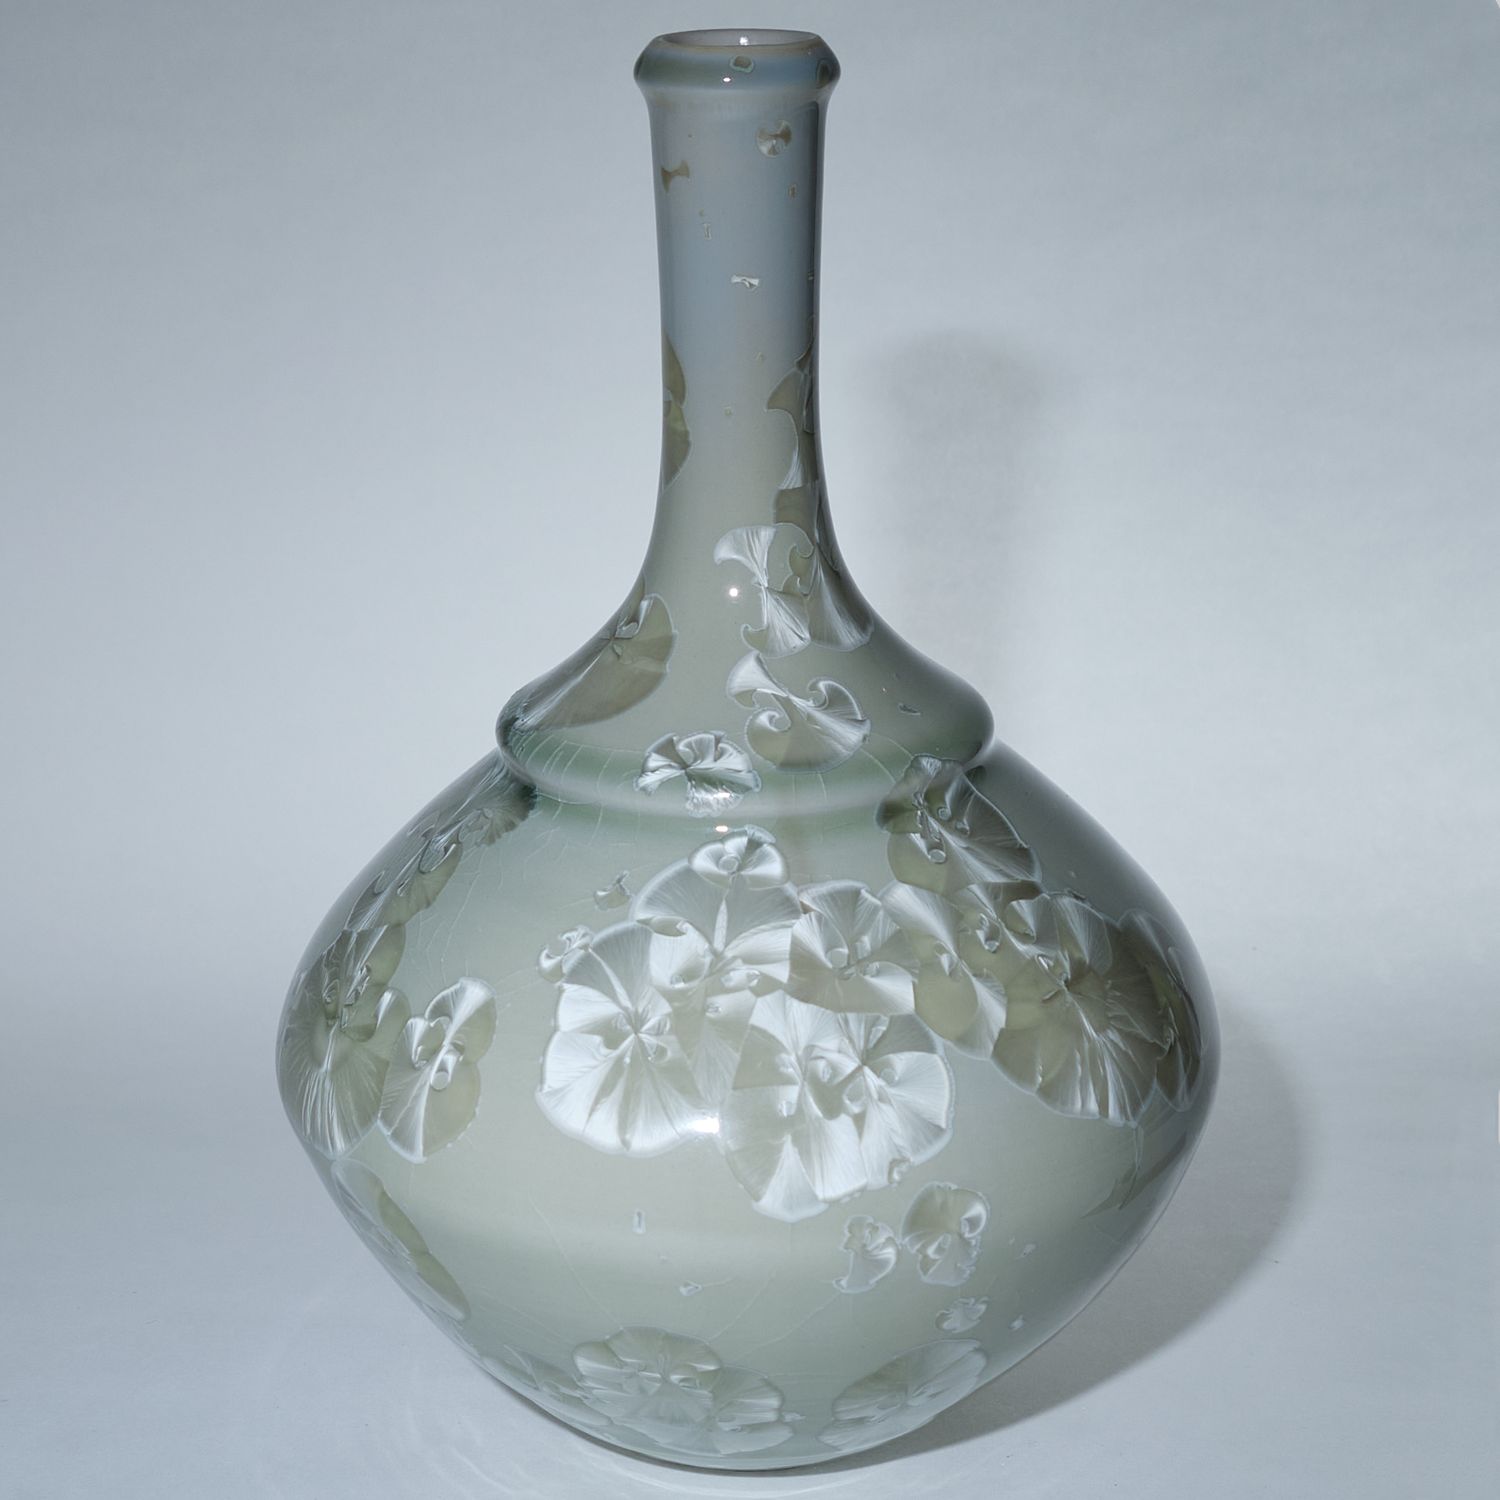 Yumiko Katsuya: Long Neck Vase – Green Product Image 1 of 1